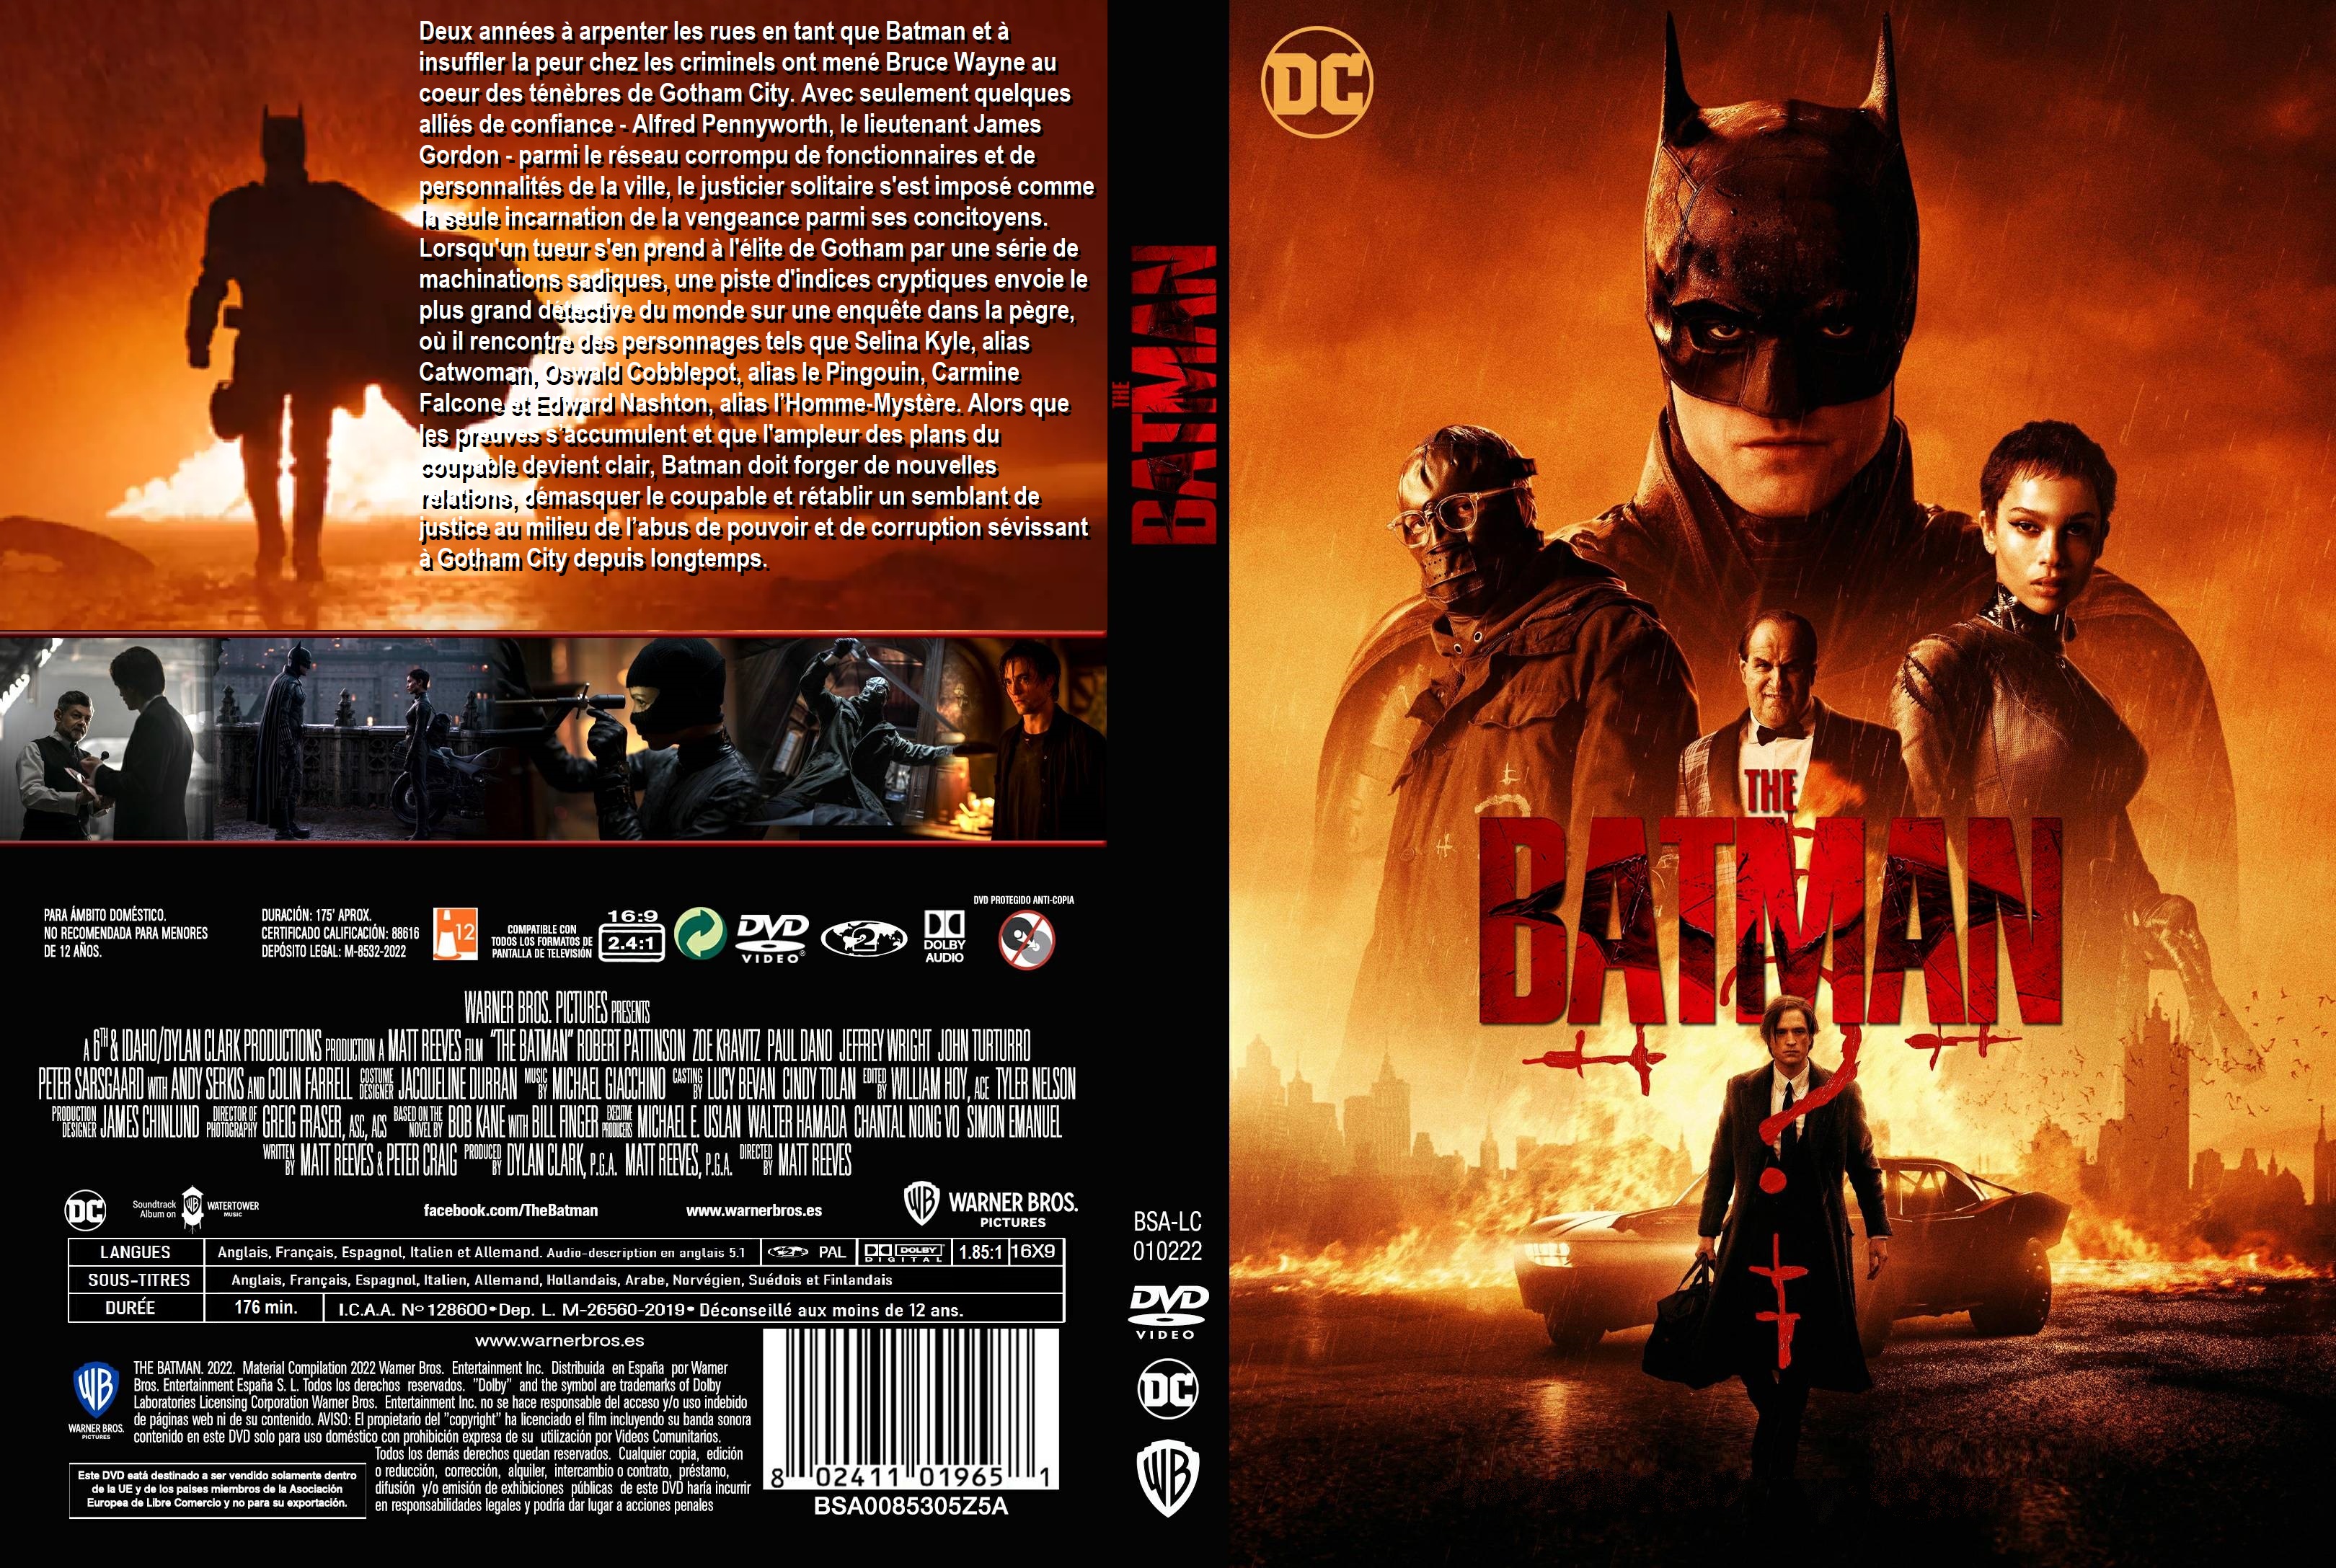 Jaquette DVD The Batman custom